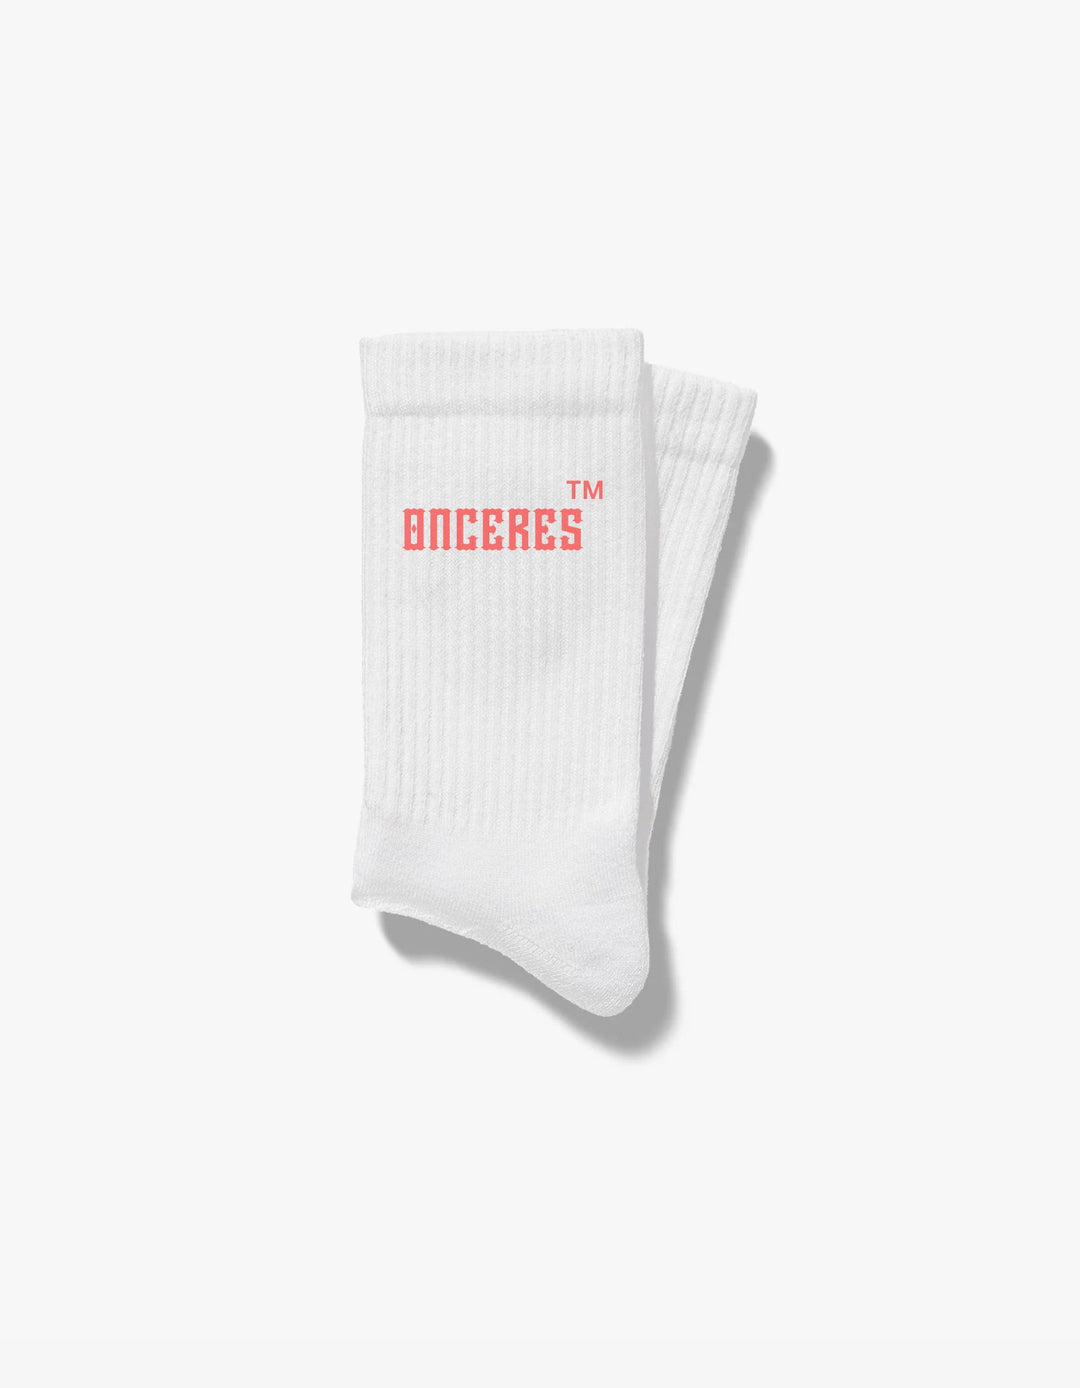 Red Logo - Crew Socks - Onceres™